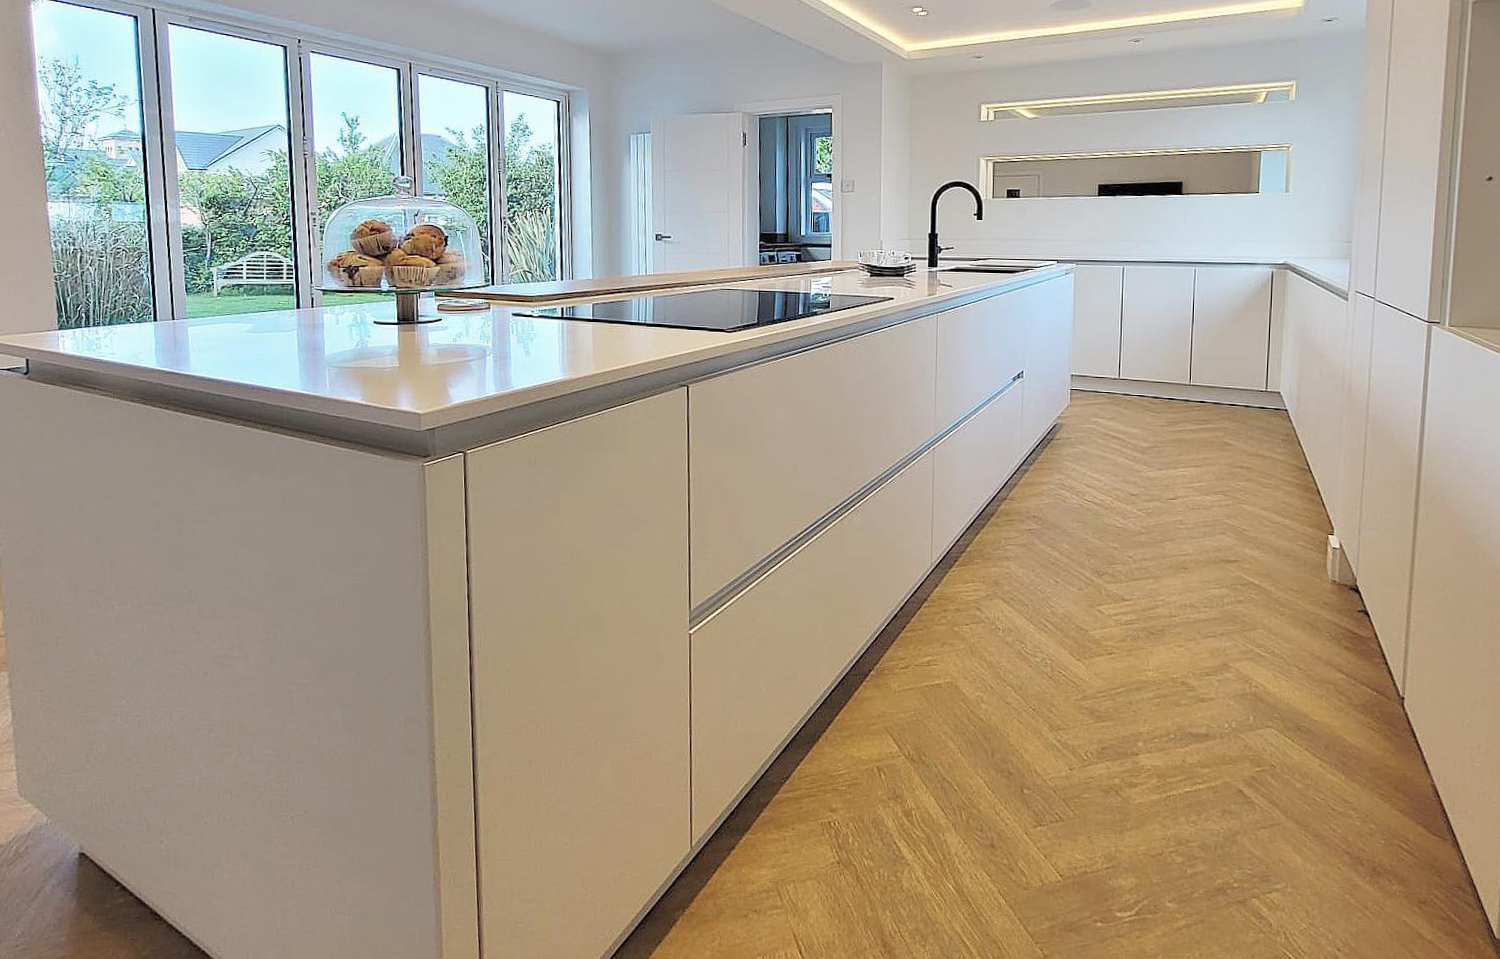 Exquisite kitchen flooring options with hardwood floors, tile flooring and concrete floors